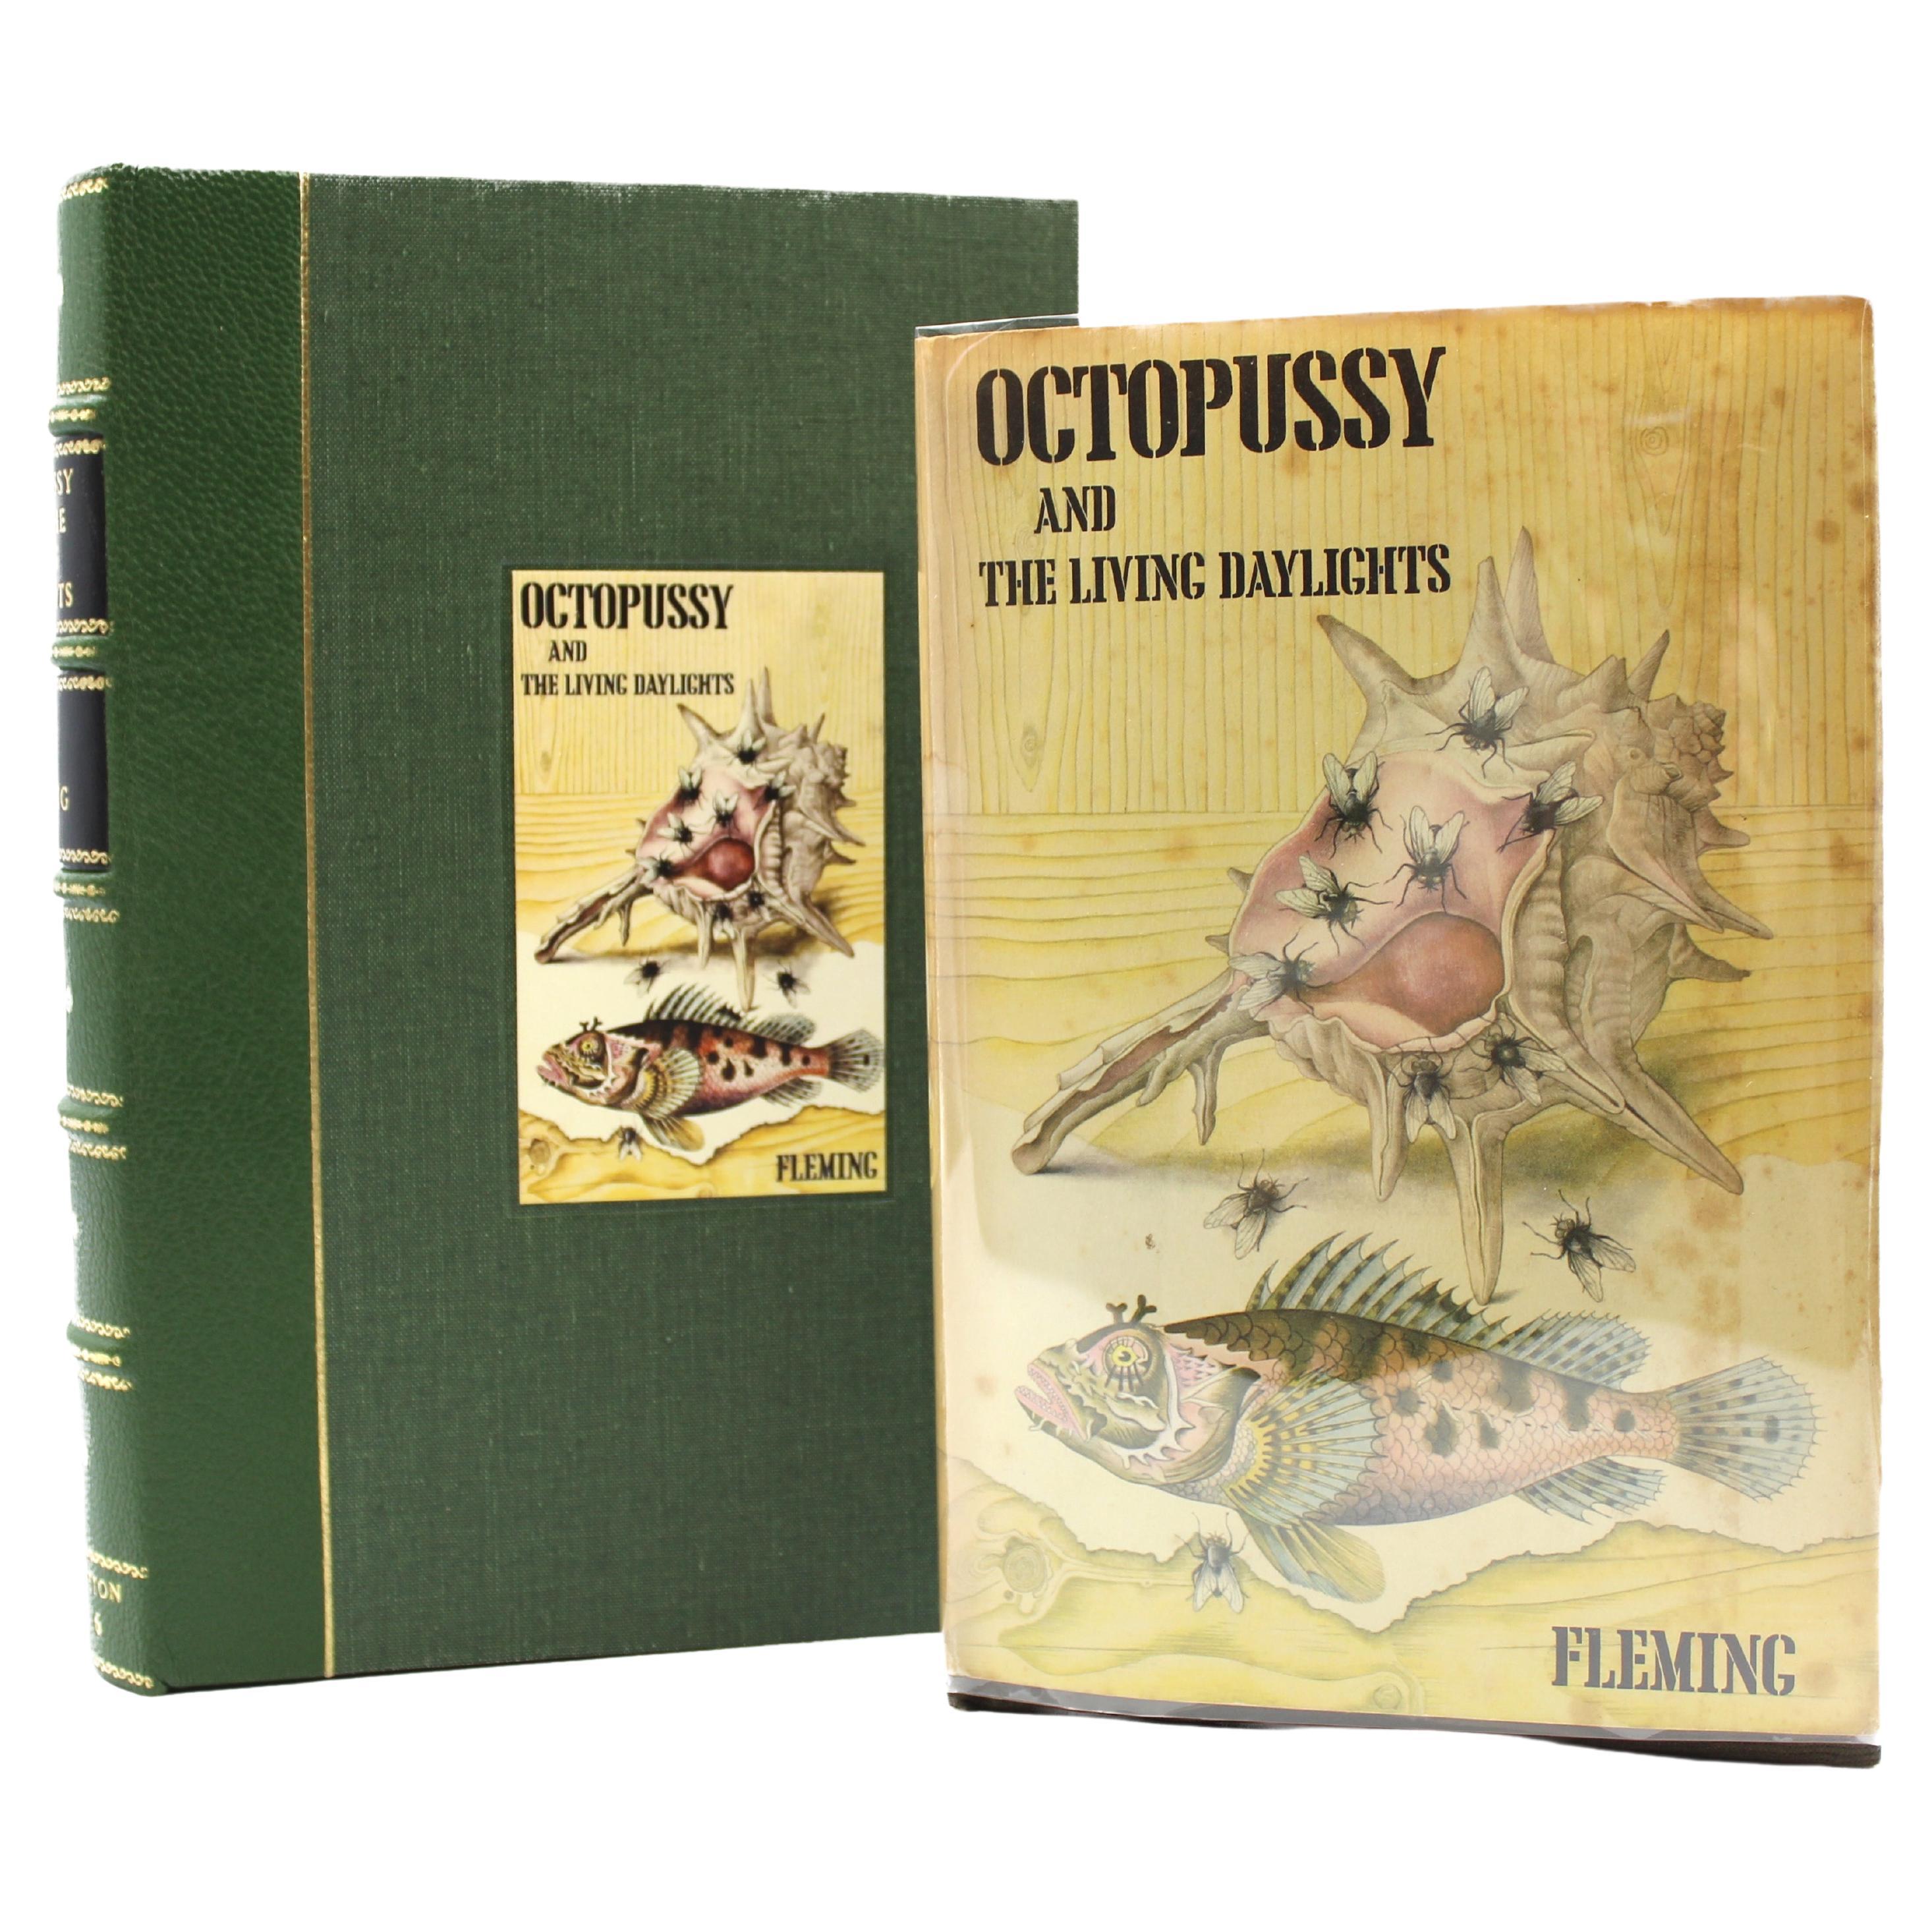 Octopussy and the Living Daylights von Ian Fleming, Erstausgabe, 1966